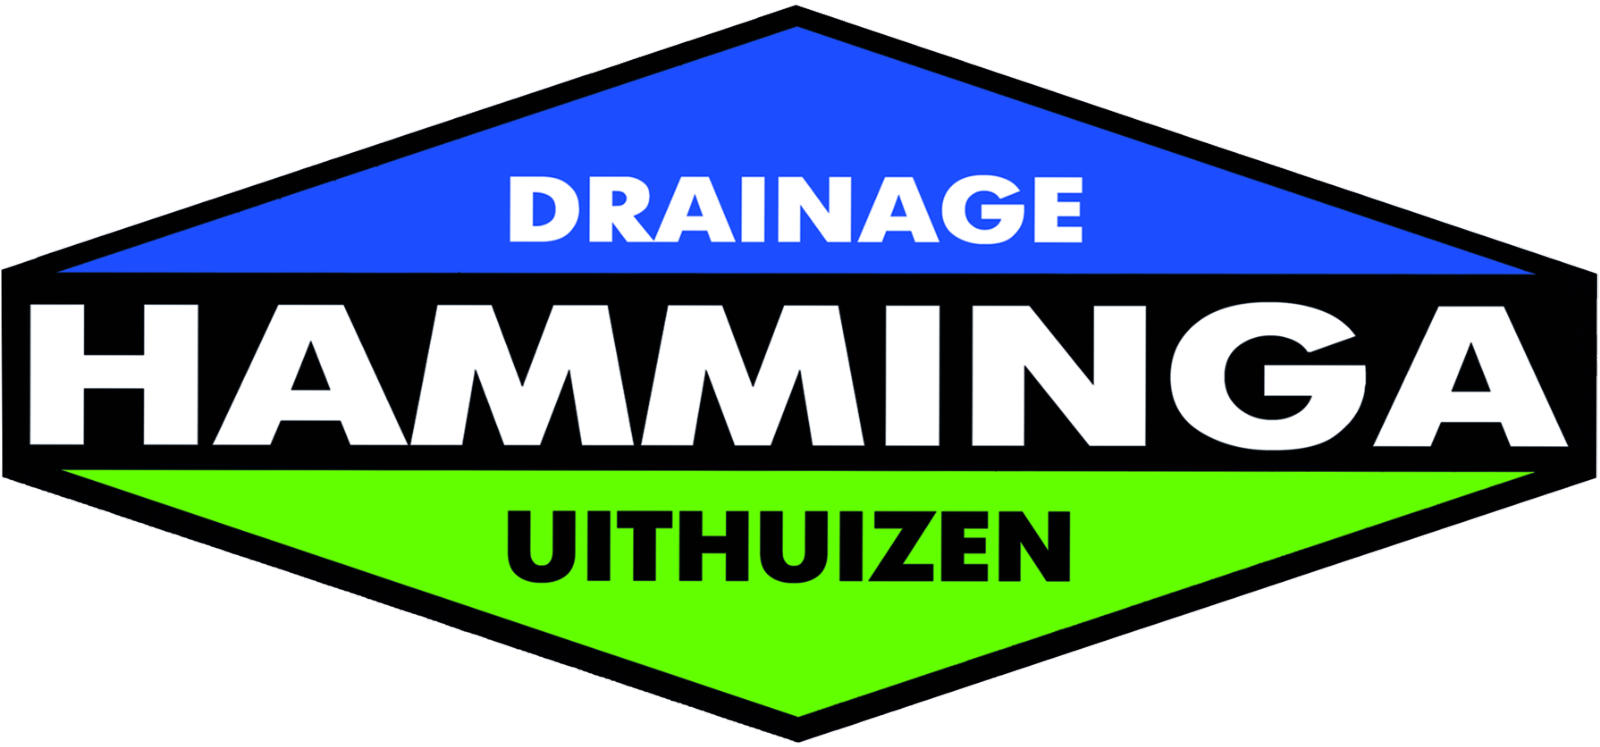 Hamminga logo